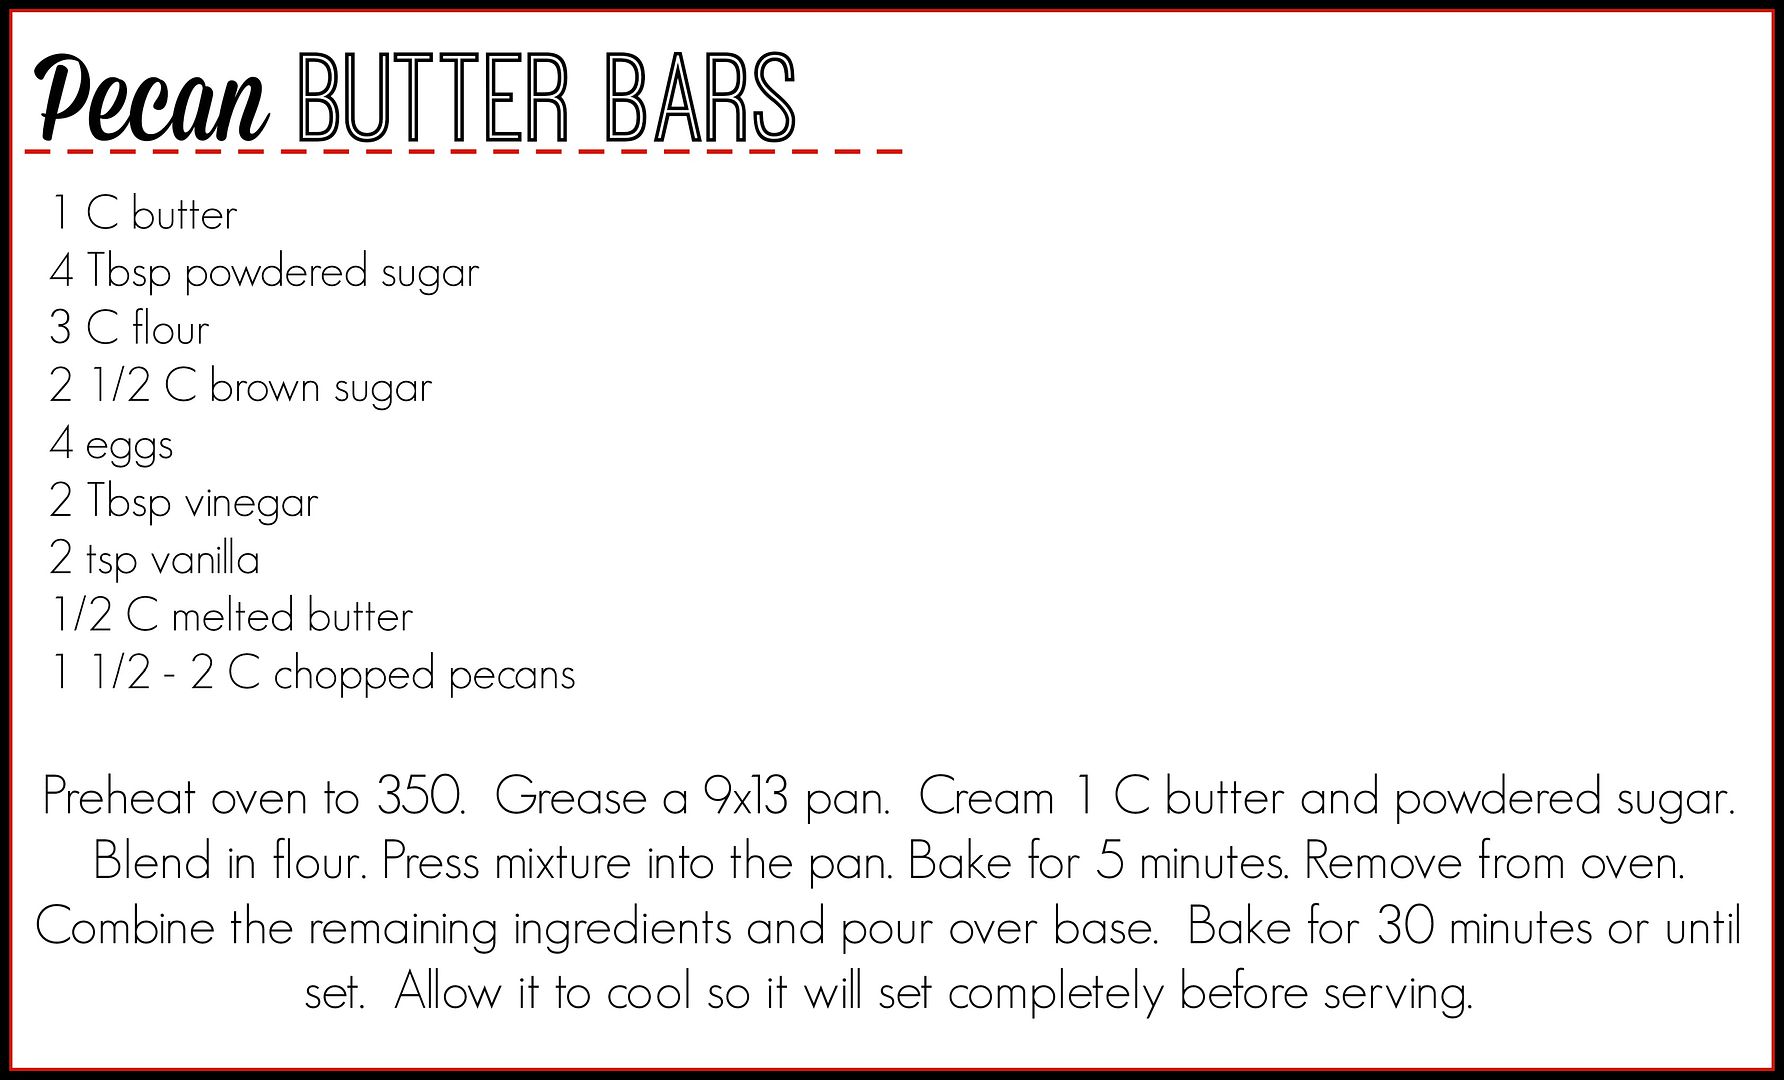 pecan butter bar recipe photo pecanbutterbars6_zps852b991b.jpg